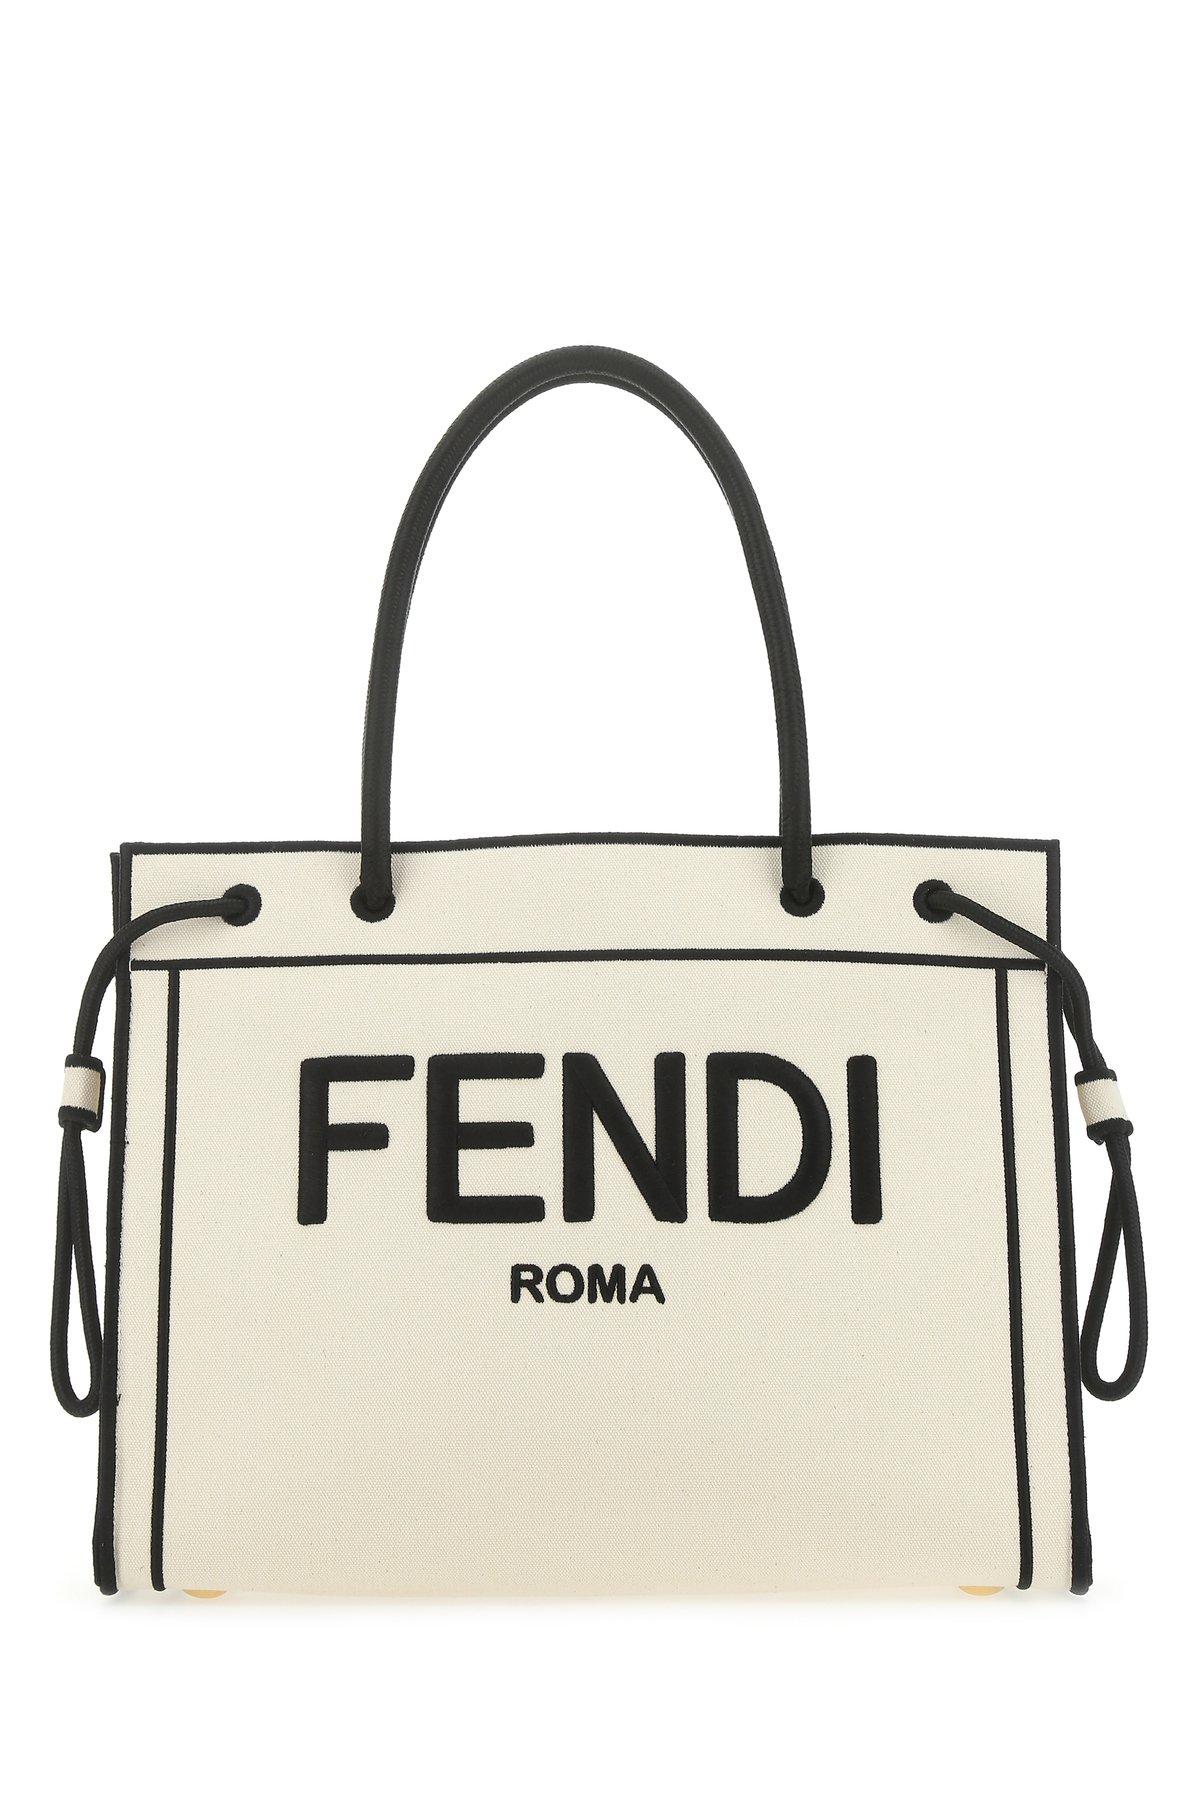 Fendi Synthetic Roma Medium Shopper Tote Bag in White - Lyst